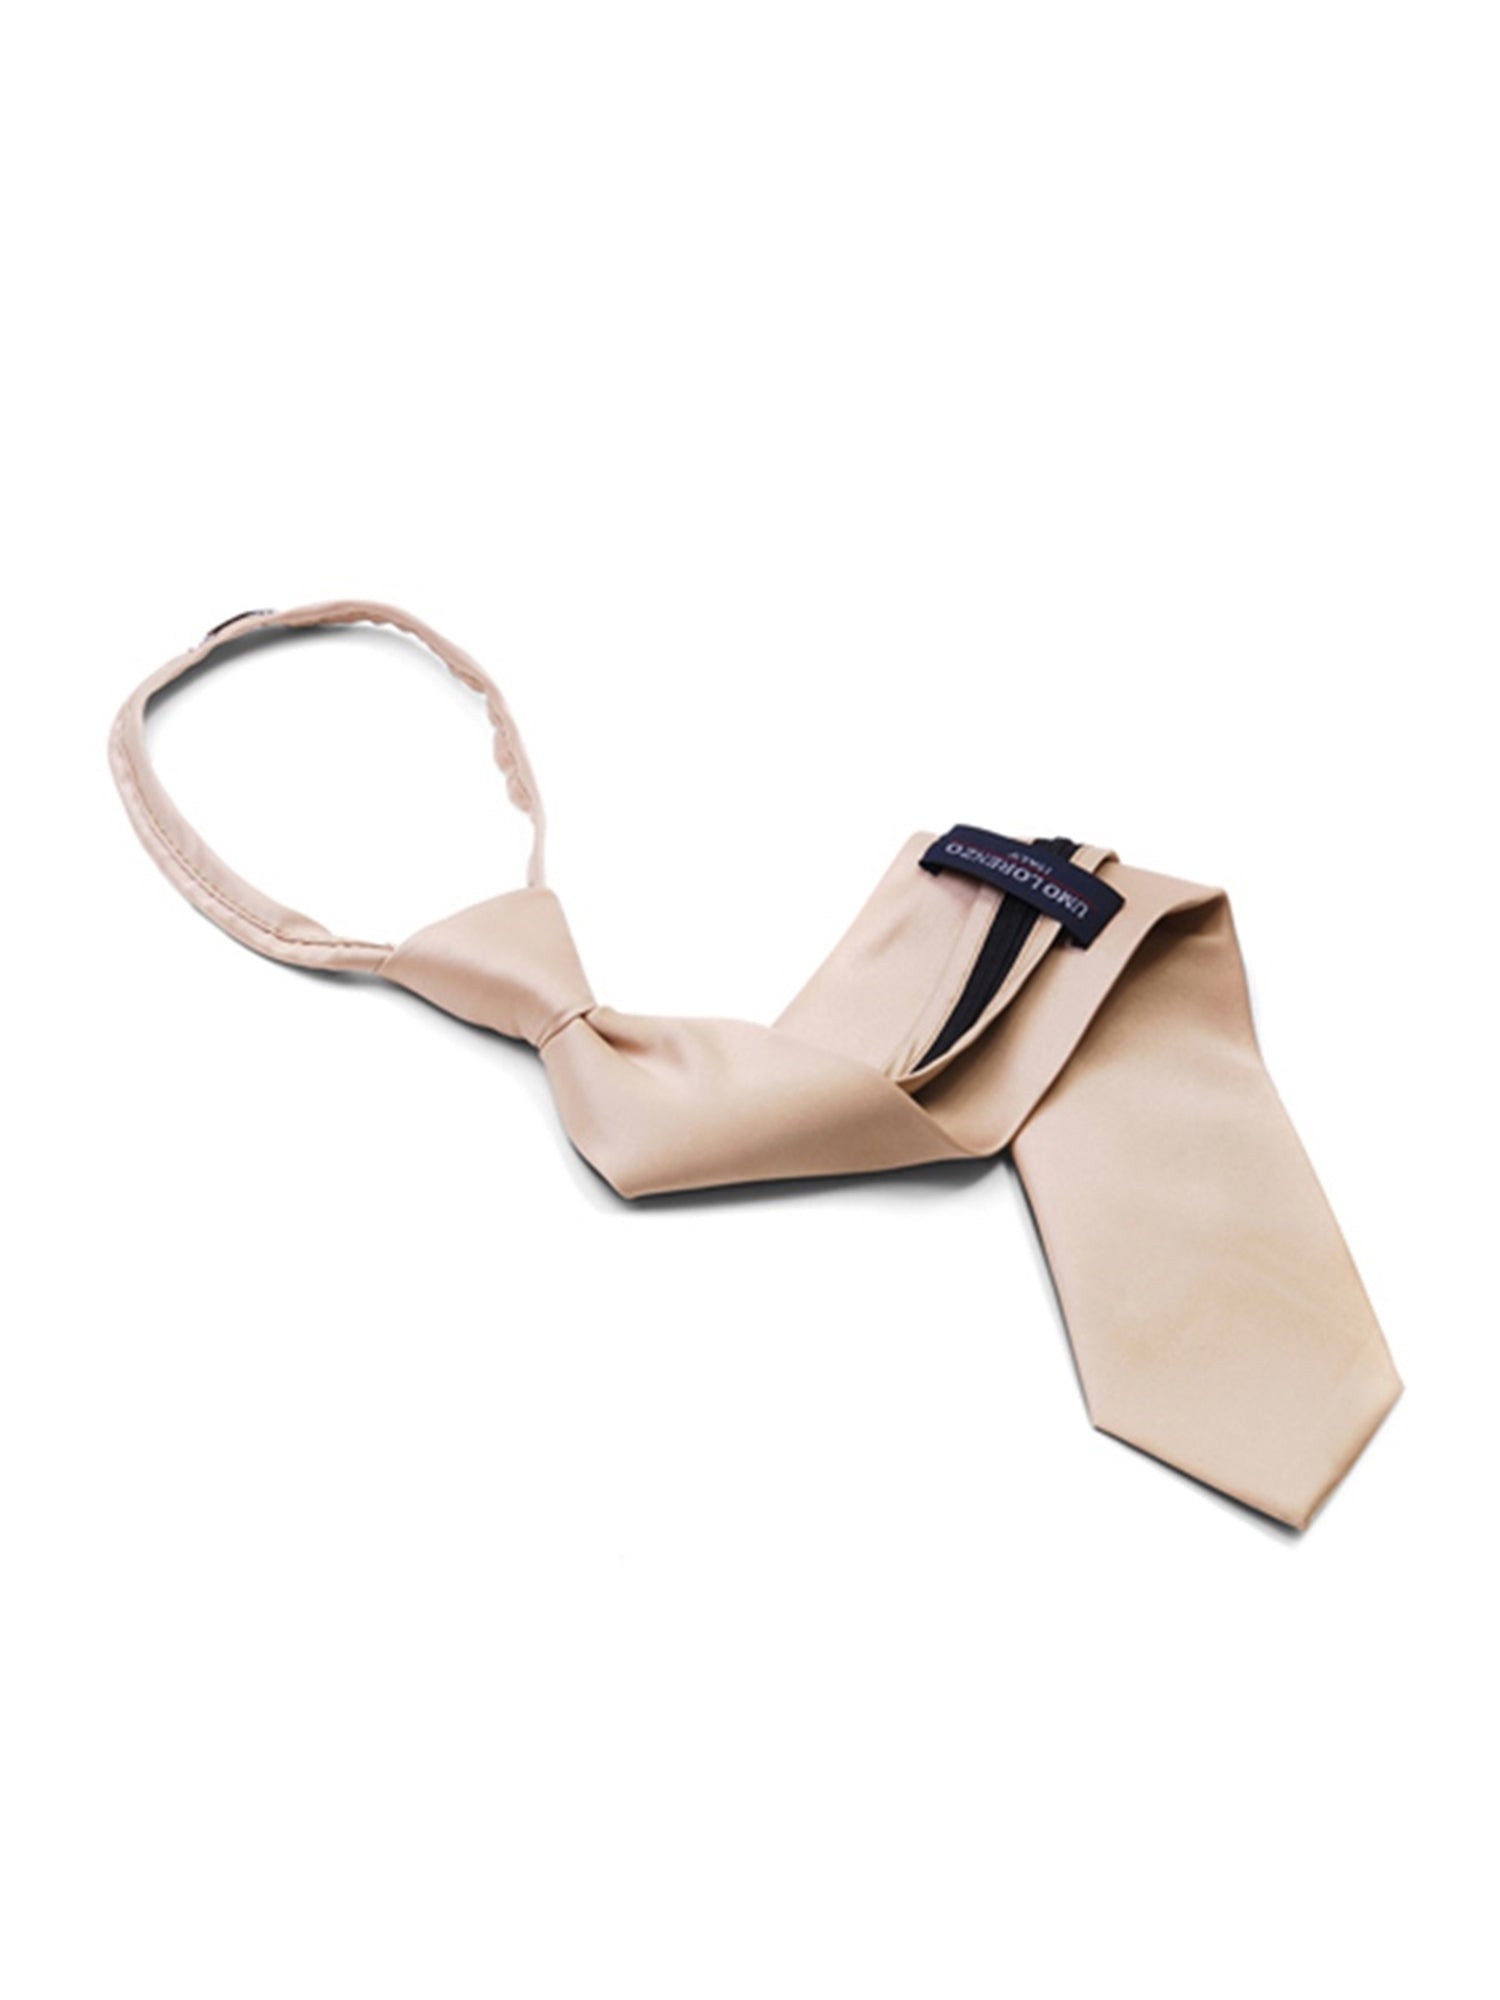 Men's Solid Color Pre-tied Zipper Neck Tie Dapper Neckwear TheDapperTie Tan One Size 